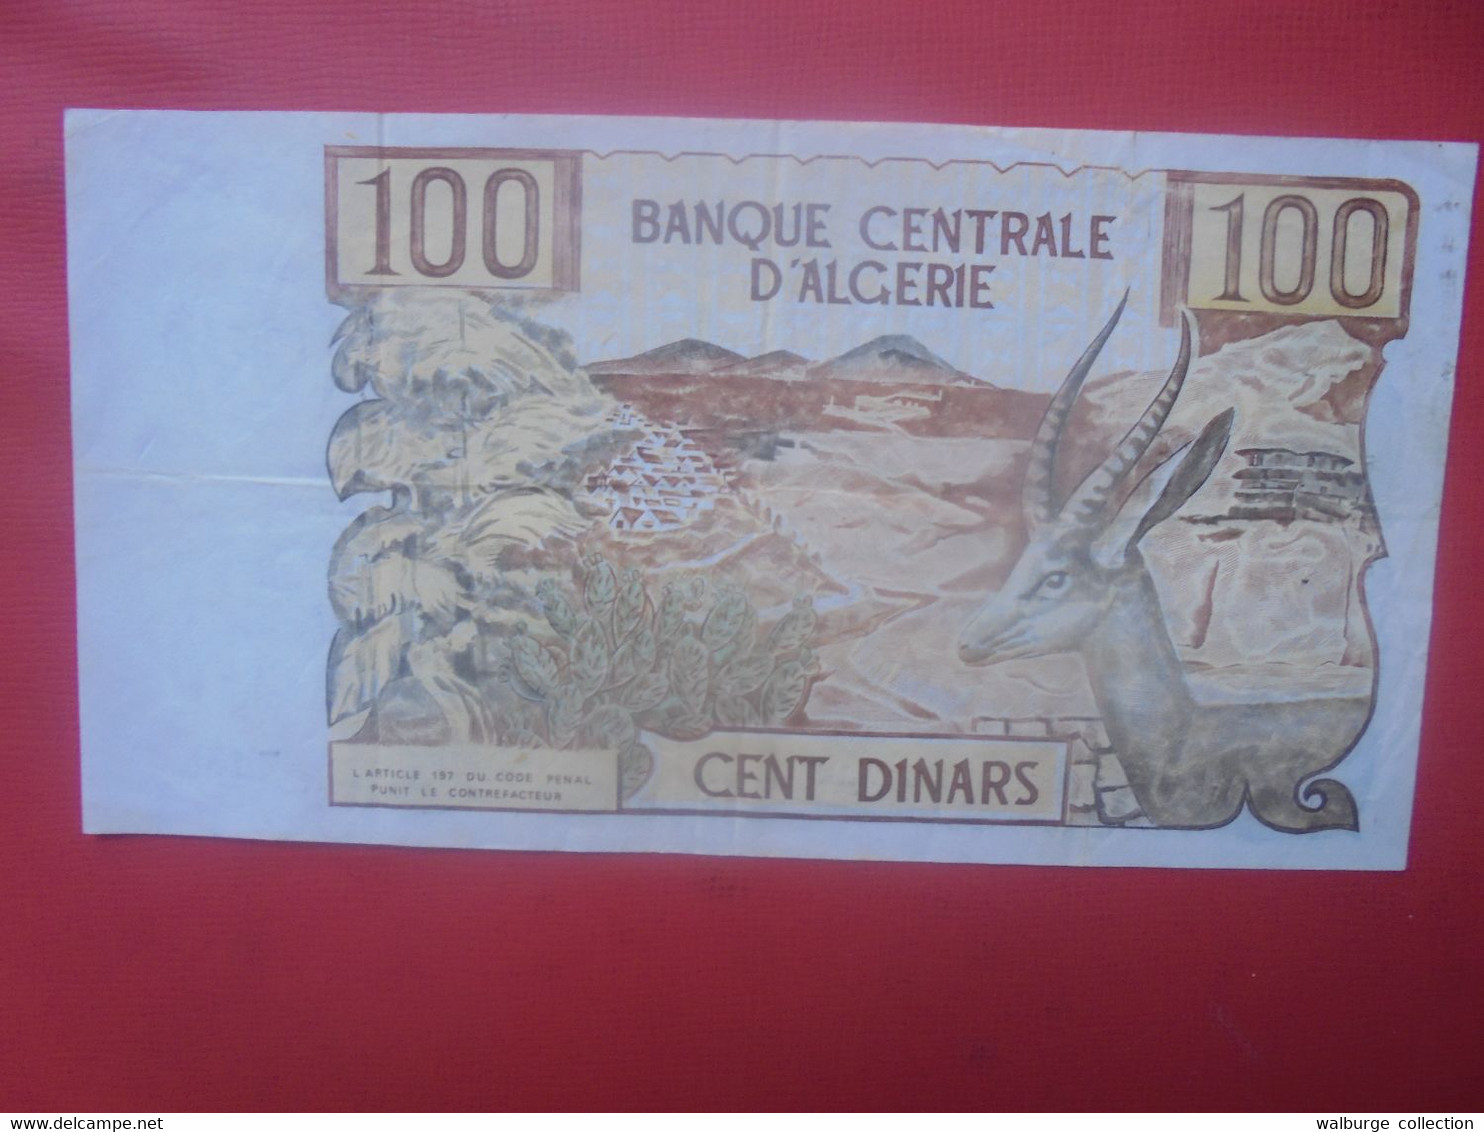 ALGERIE 100 DINARS 1970 Circuler (L.17) - Algérie